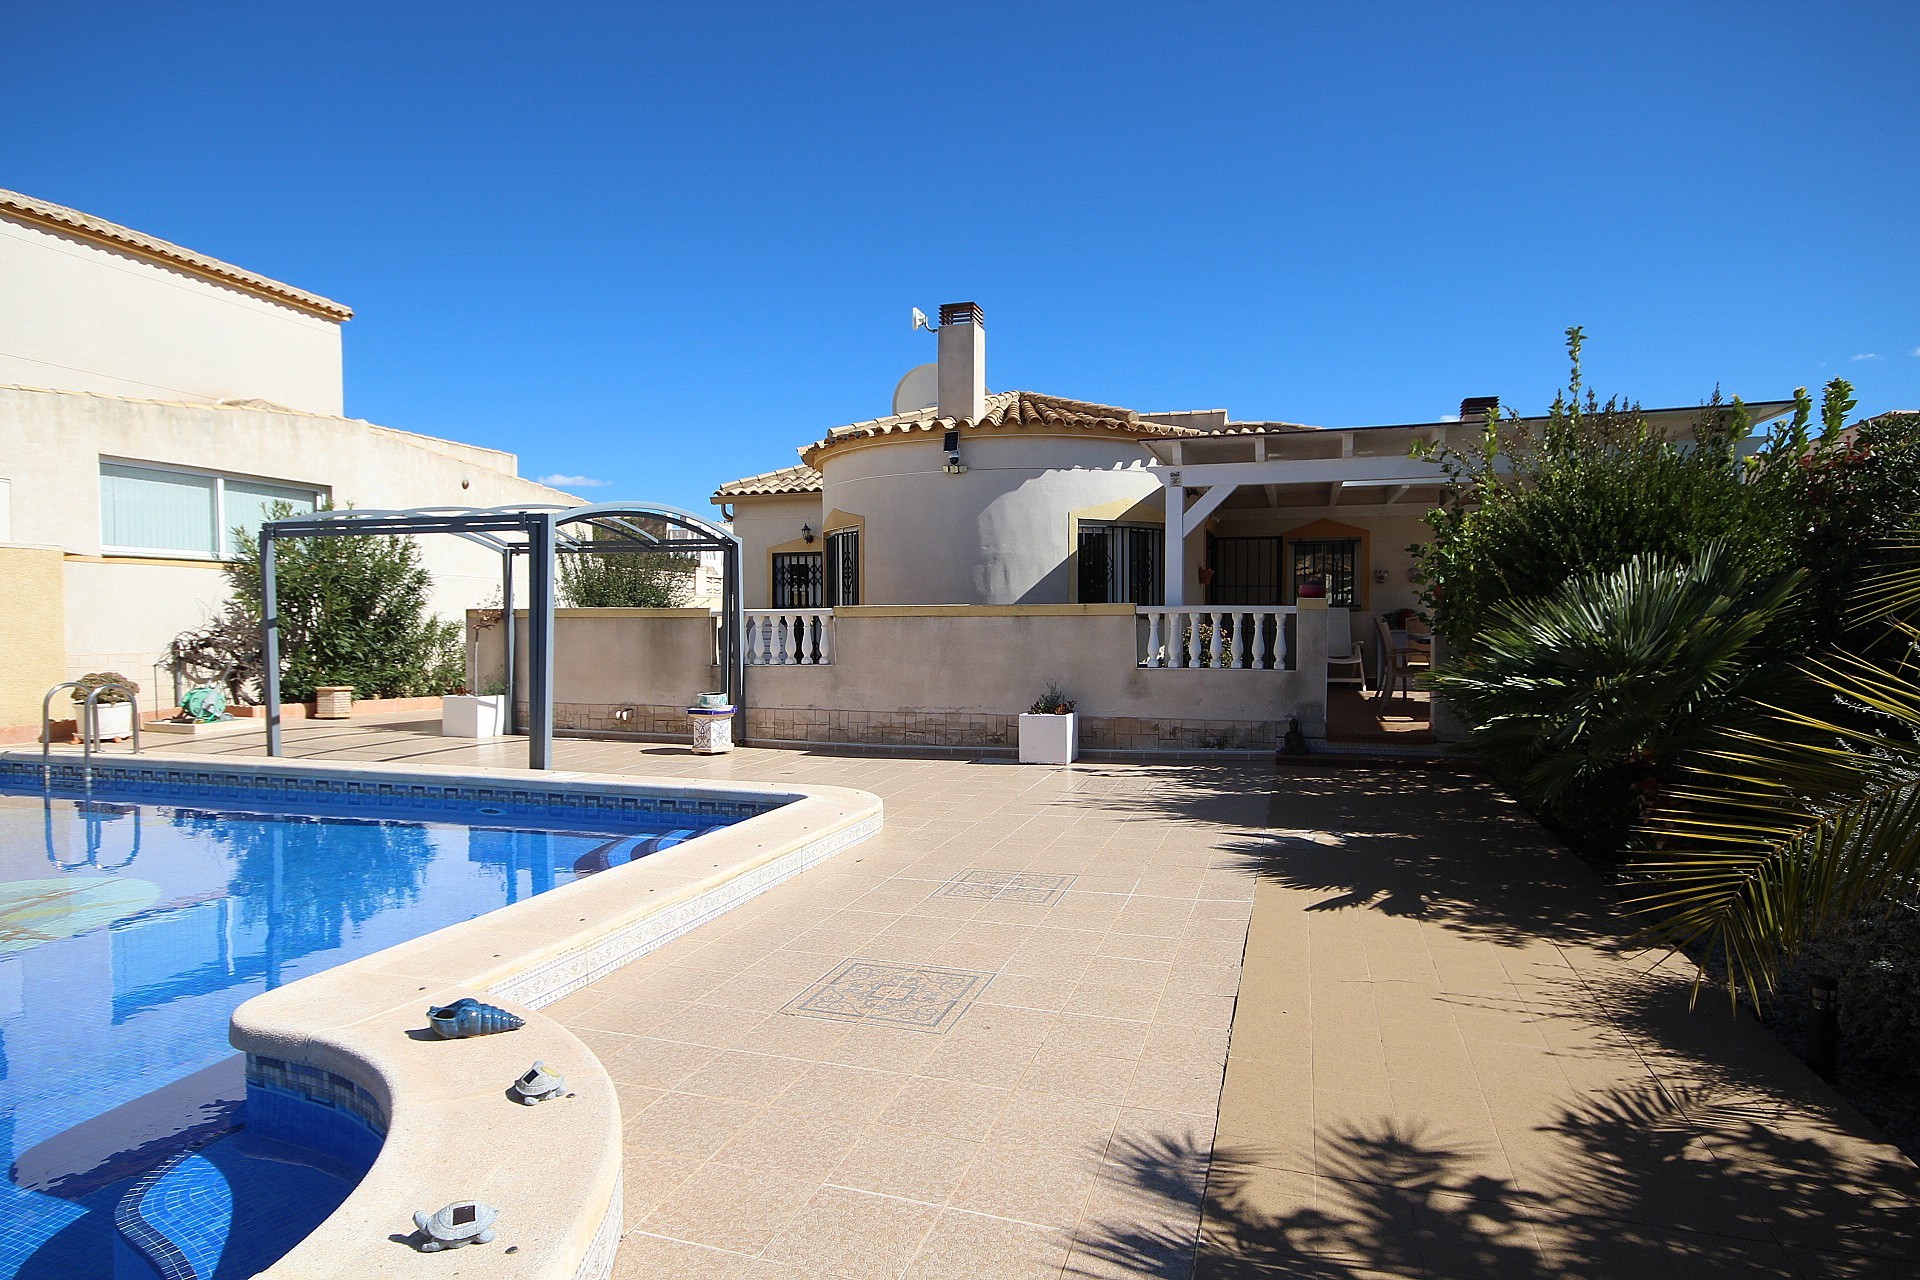 3 bedroom house / villa for sale in Castalla, Costa Blanca